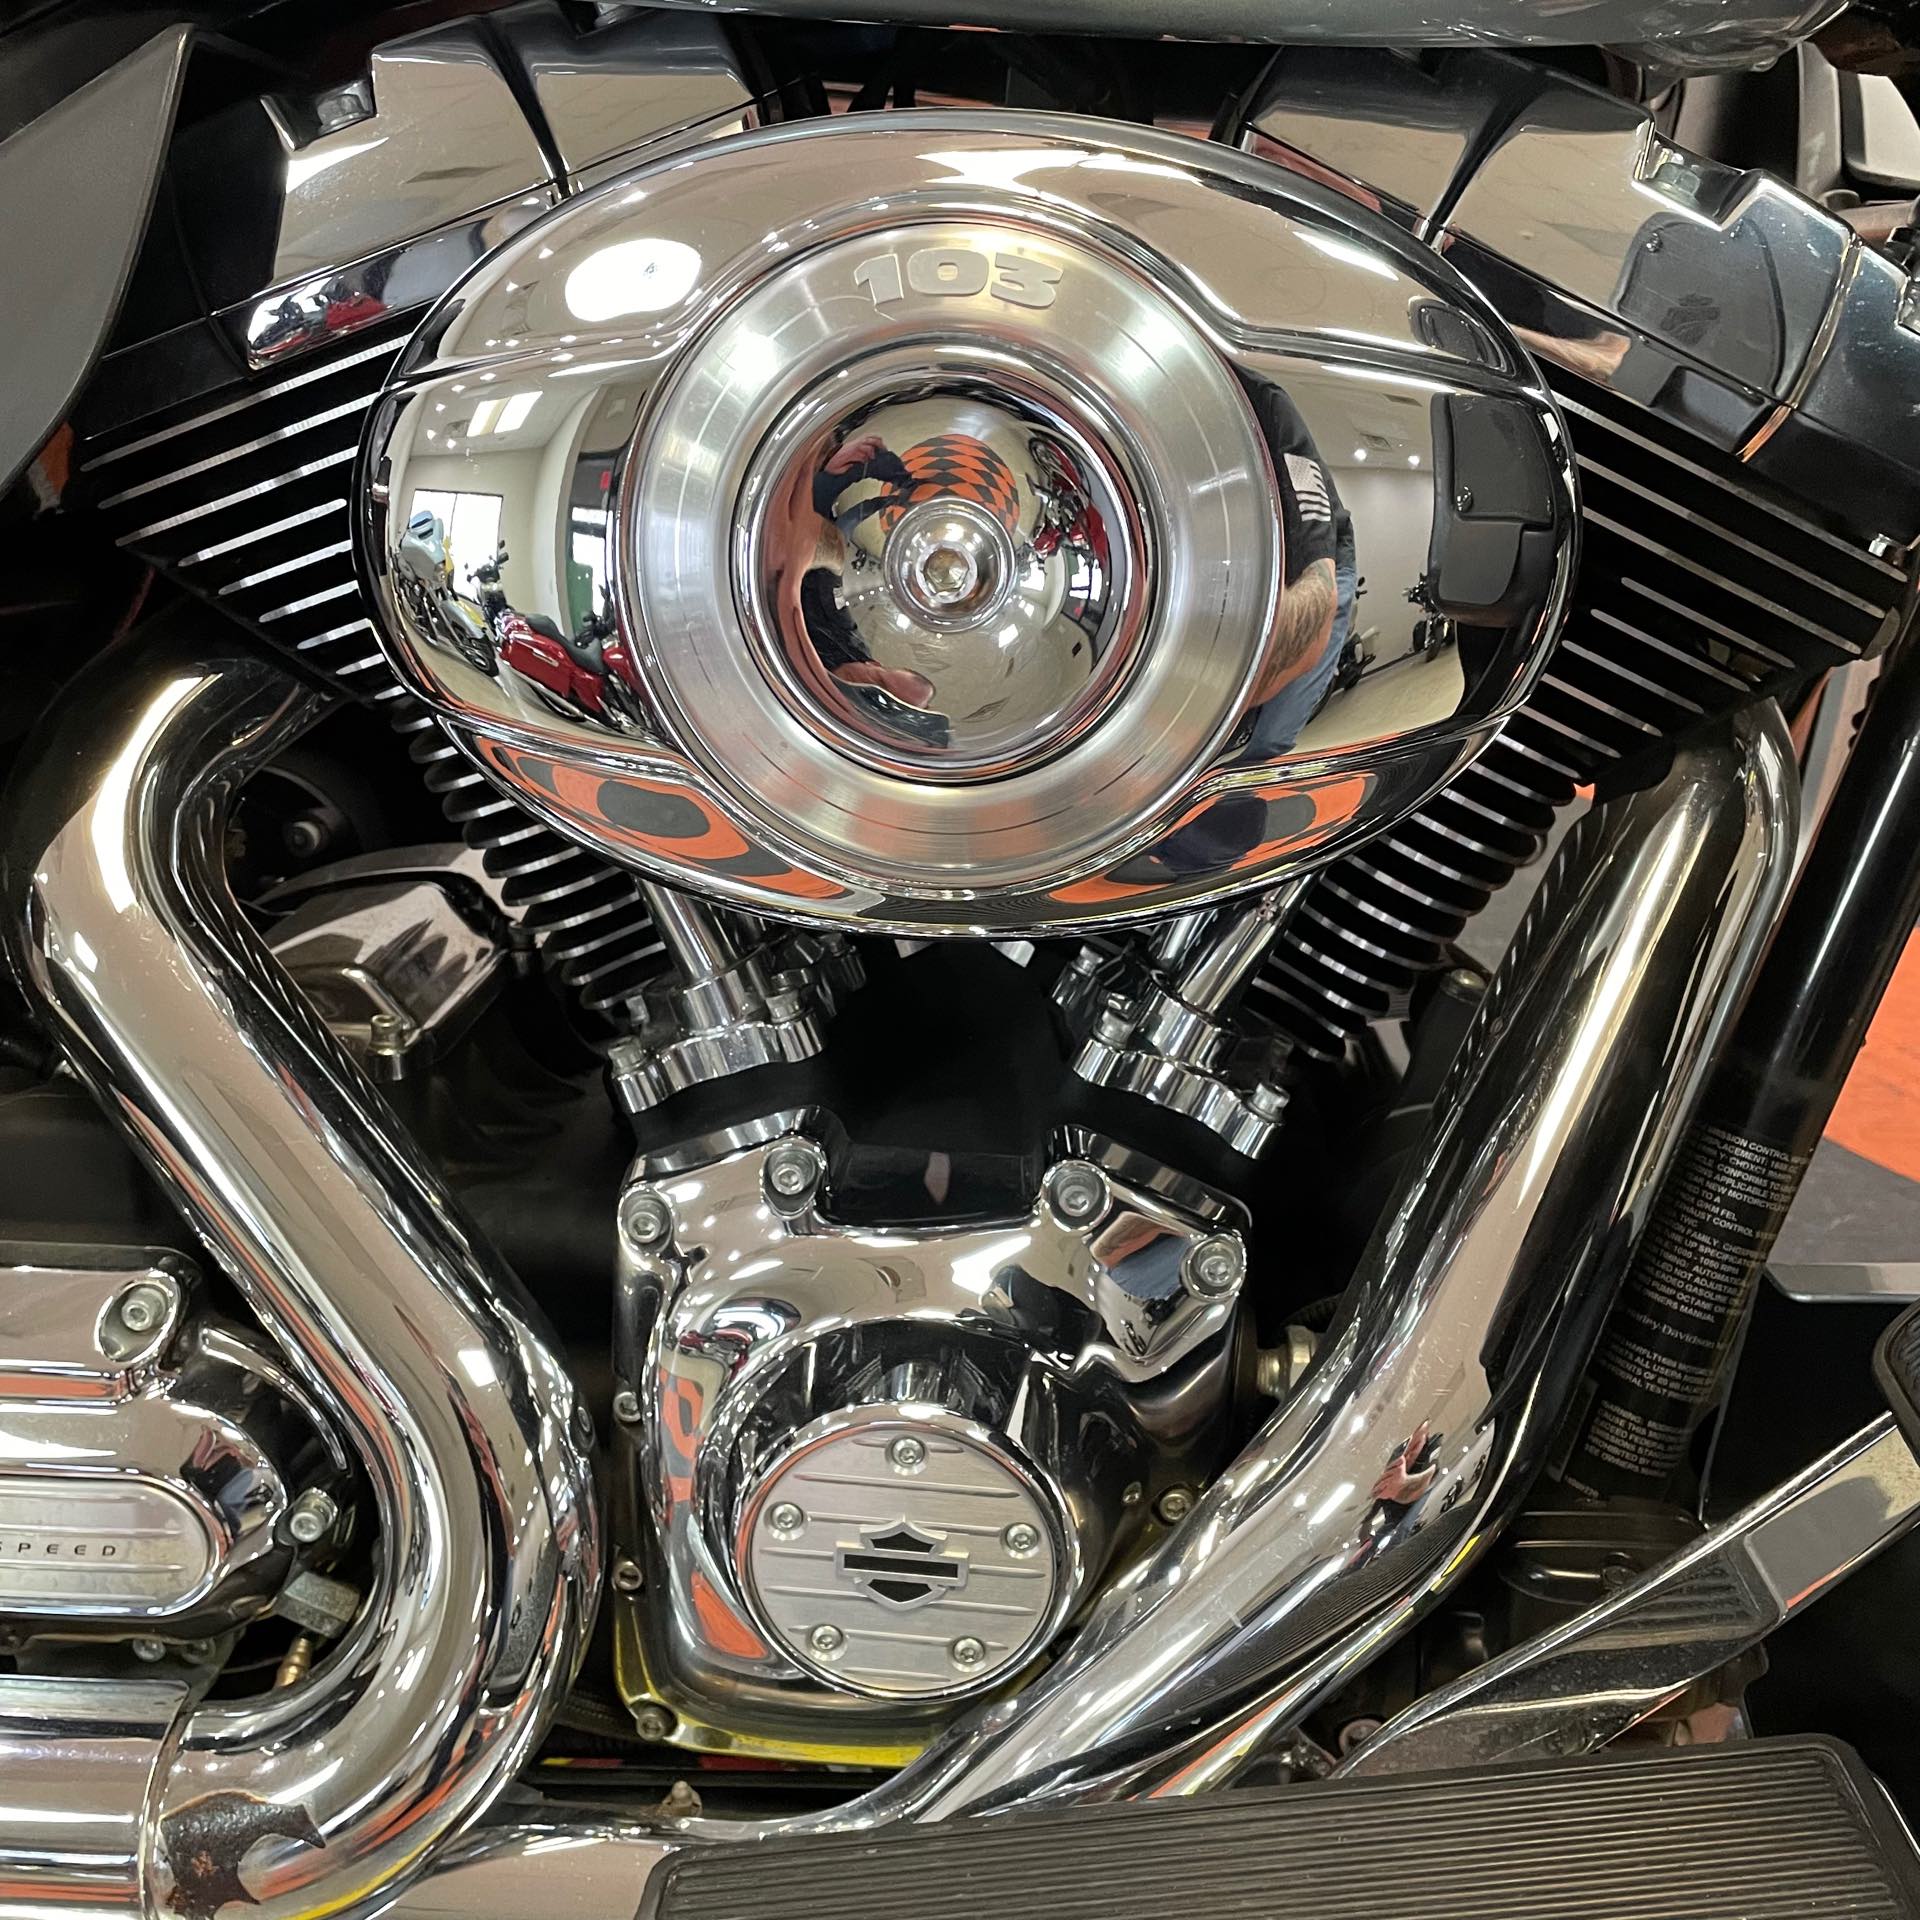 2012 Harley-Davidson Electra Glide Ultra Limited at Harley-Davidson of Indianapolis